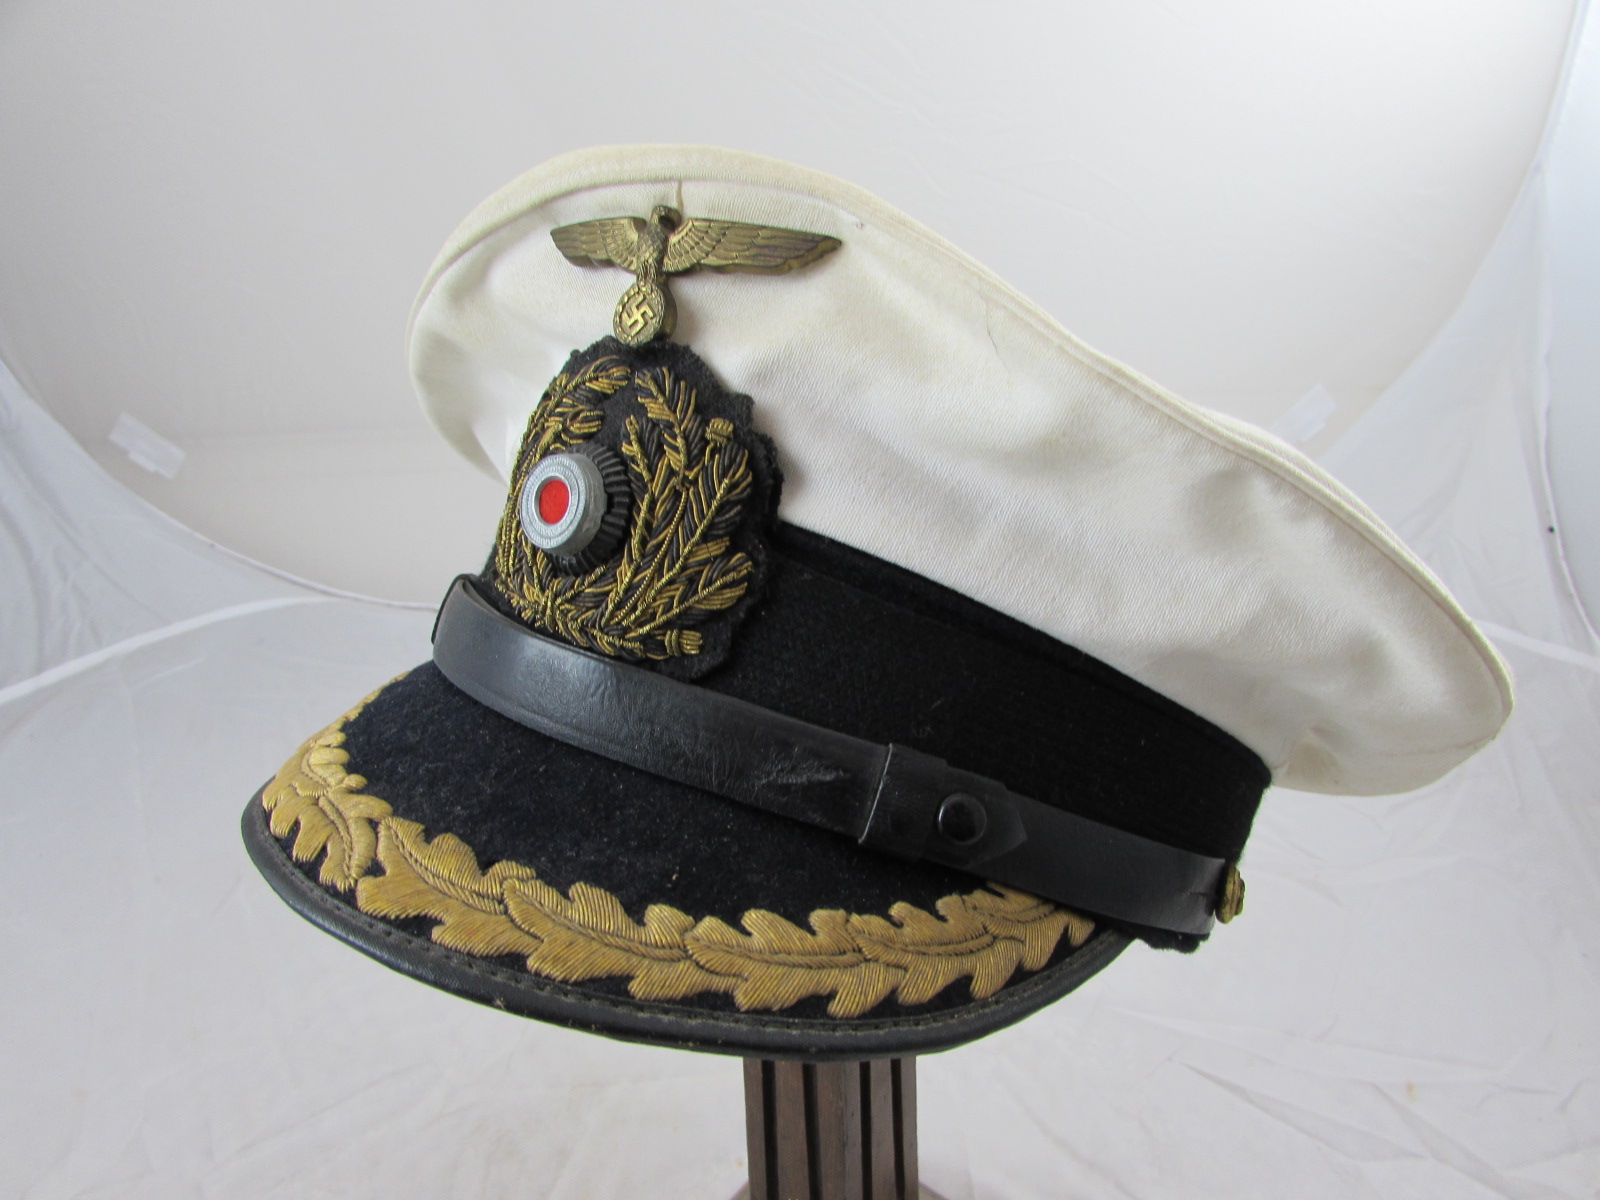 Kriegsmarine Captain's White Top Peaked Cap